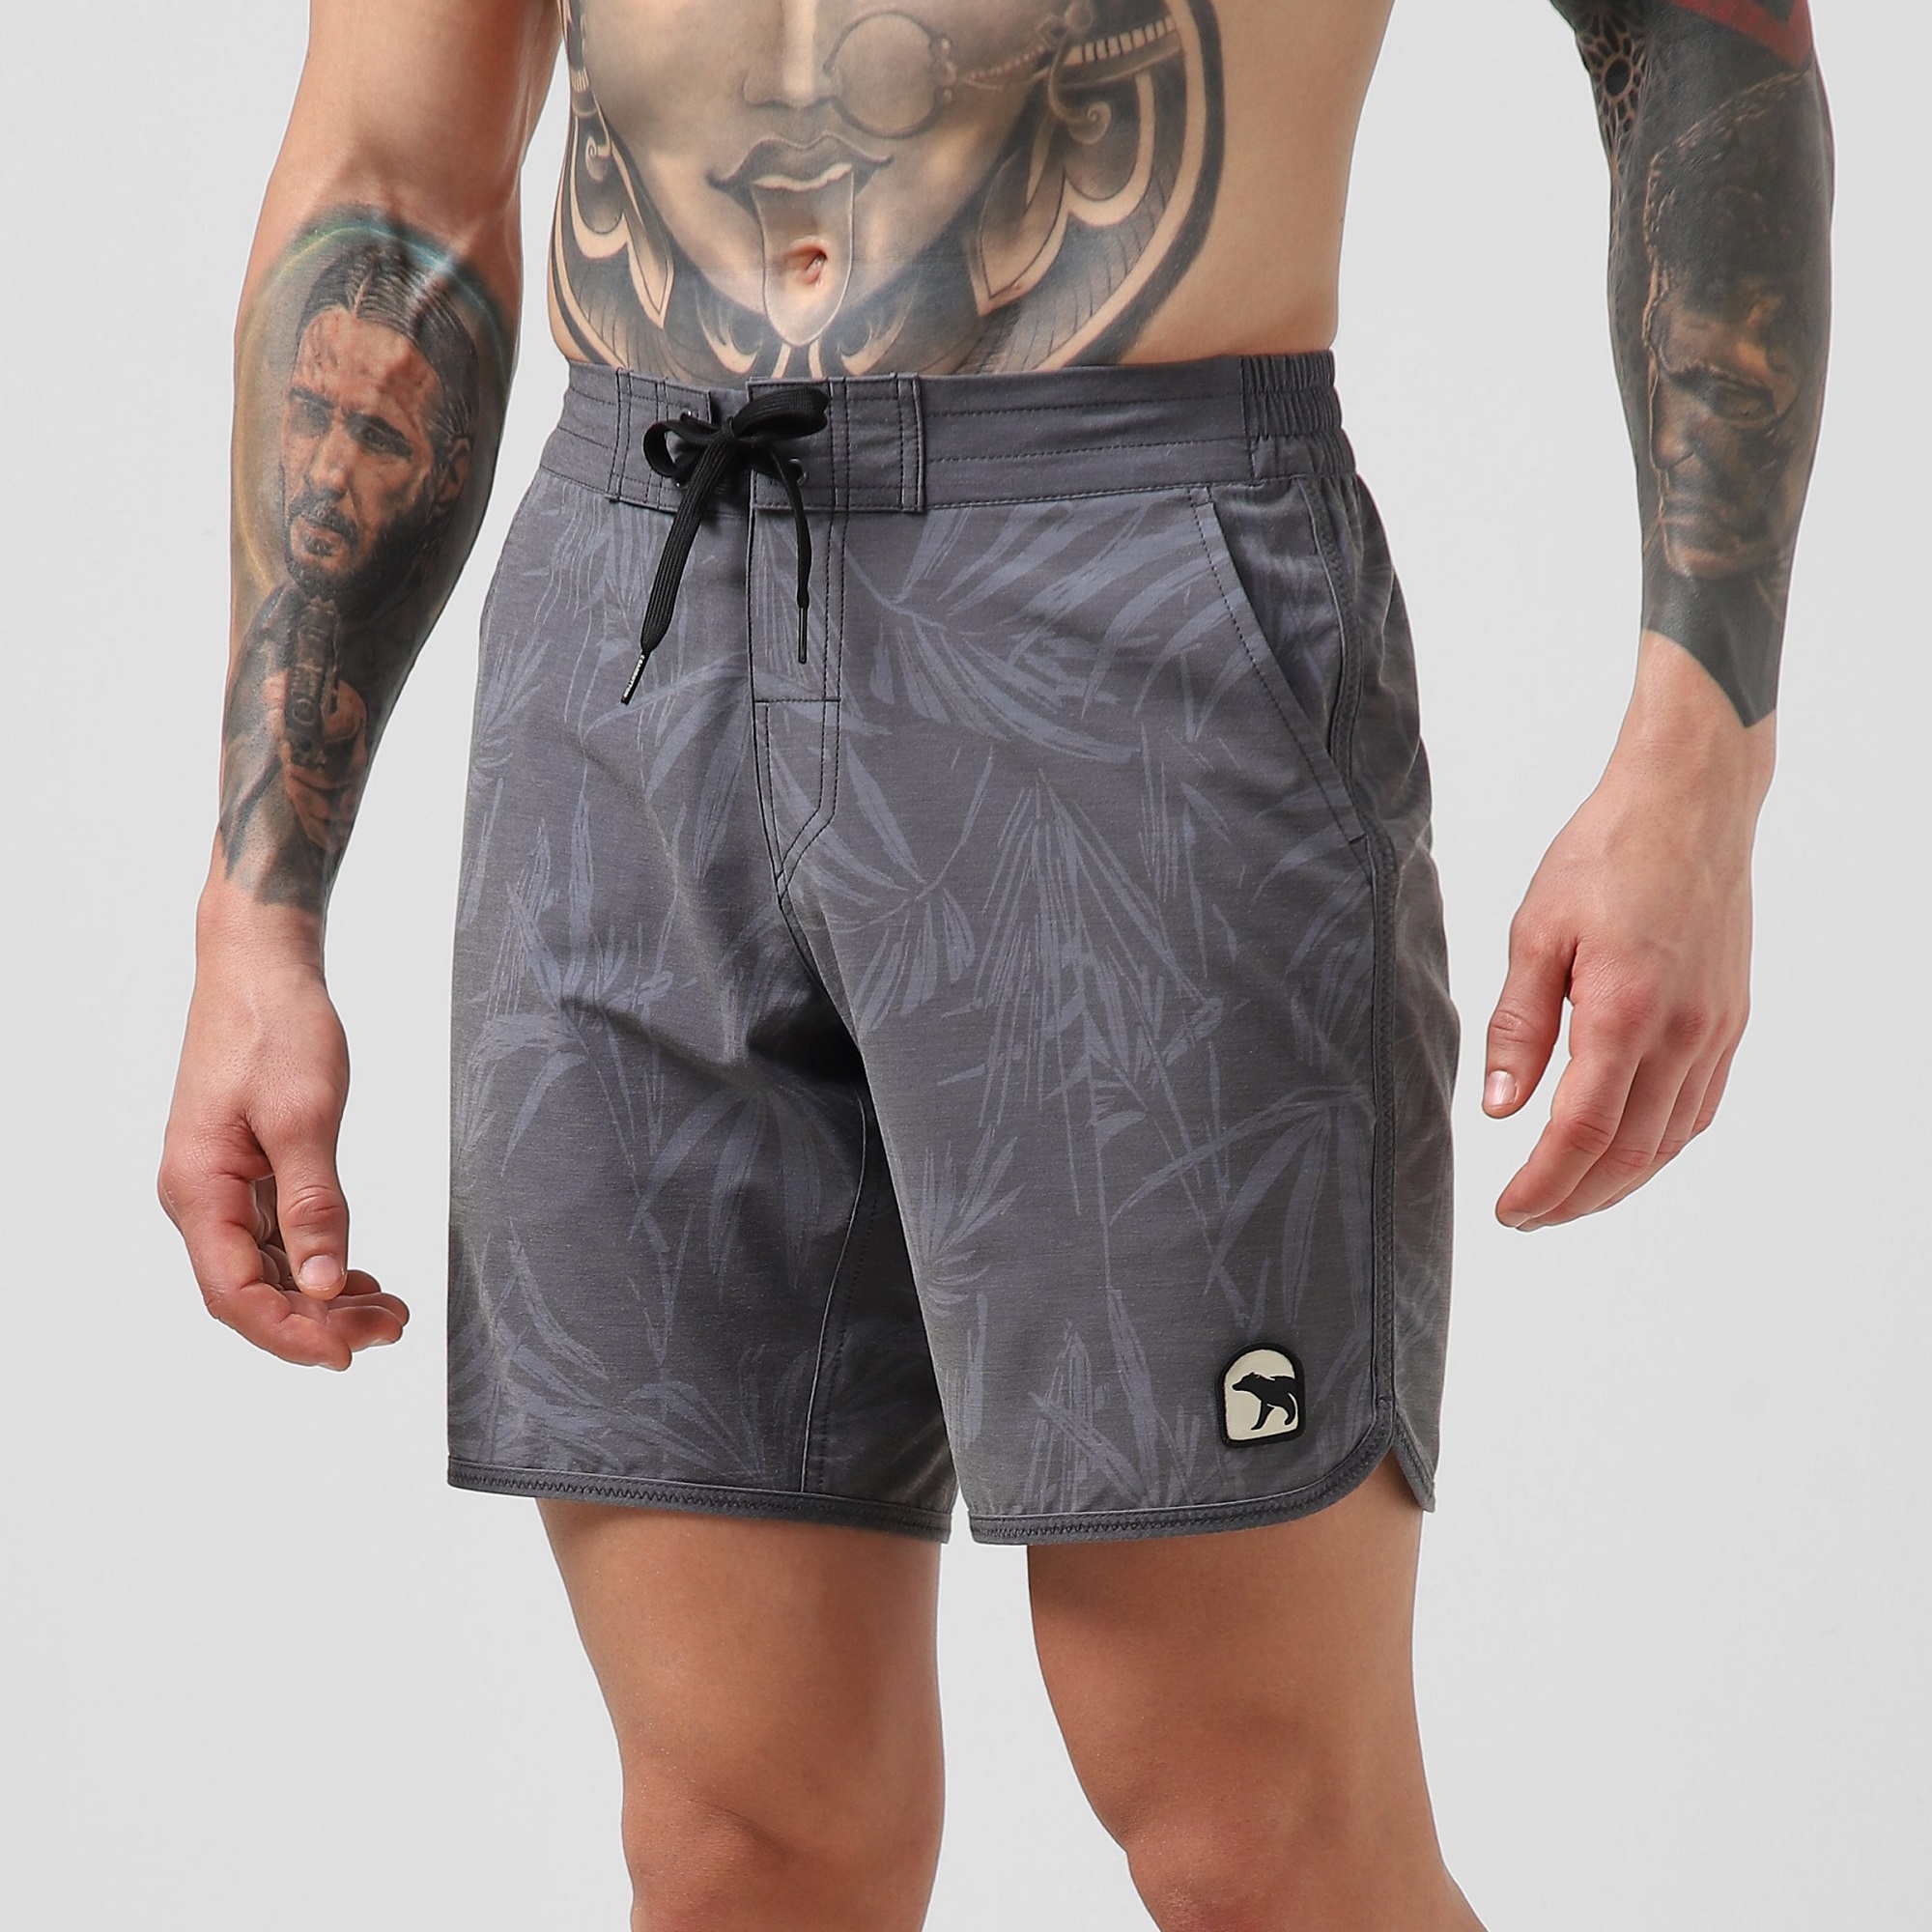 Bearbottom board shorts on a model